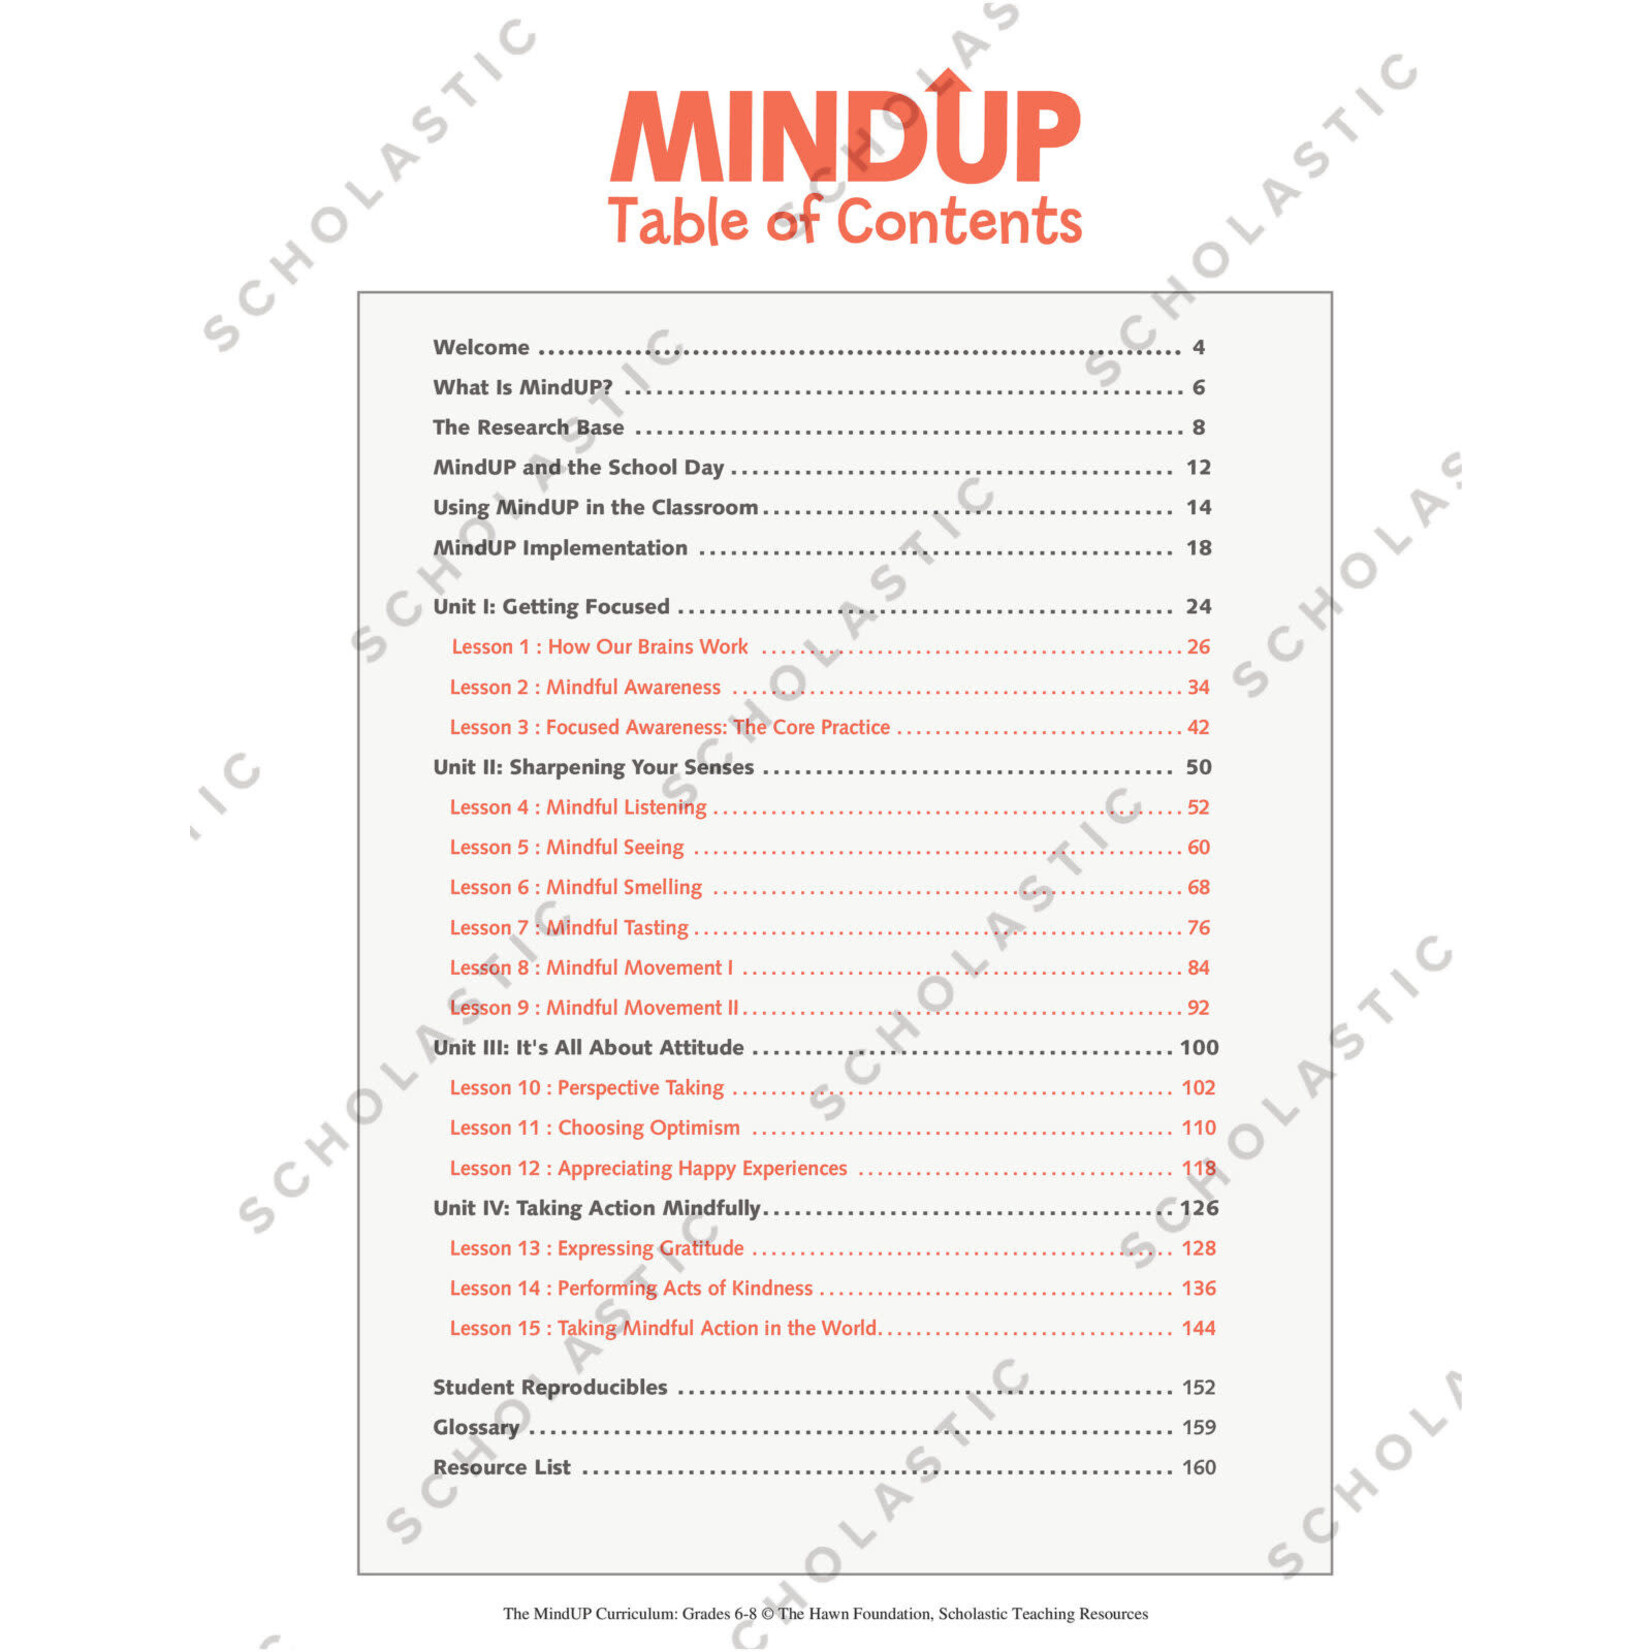 SCHOLASTIC TEACHING RESOURCES The MindUP Curriculum: Grades 6-8